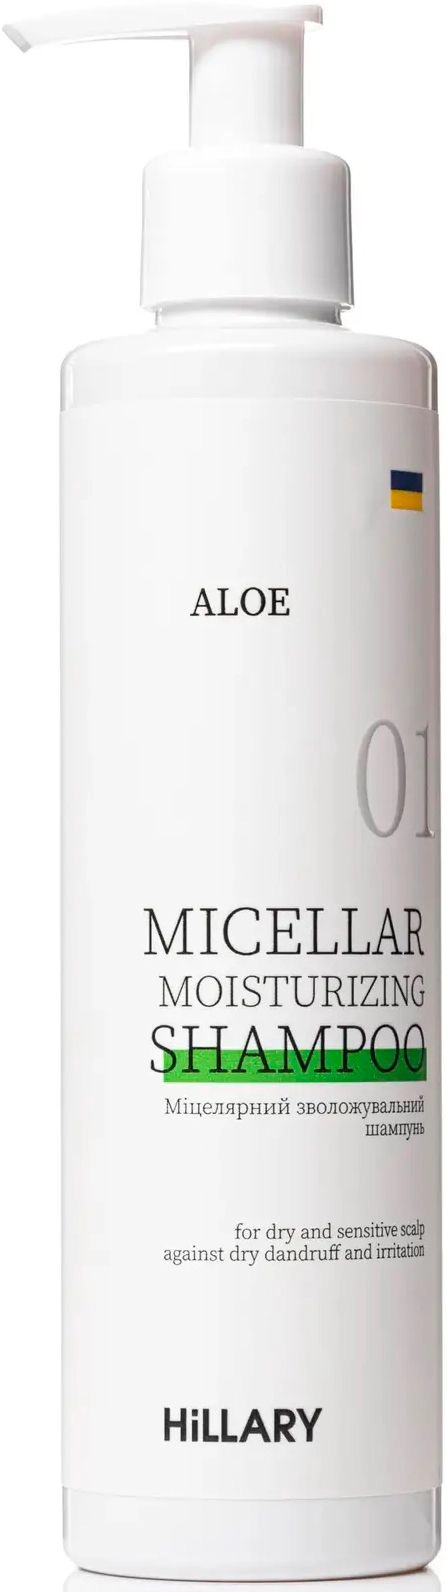 Міцелярний зволожуючий шампунь - Hillary Aloe Aloe Micellar Moisturizing Shampoo, 250 мл - фото N1